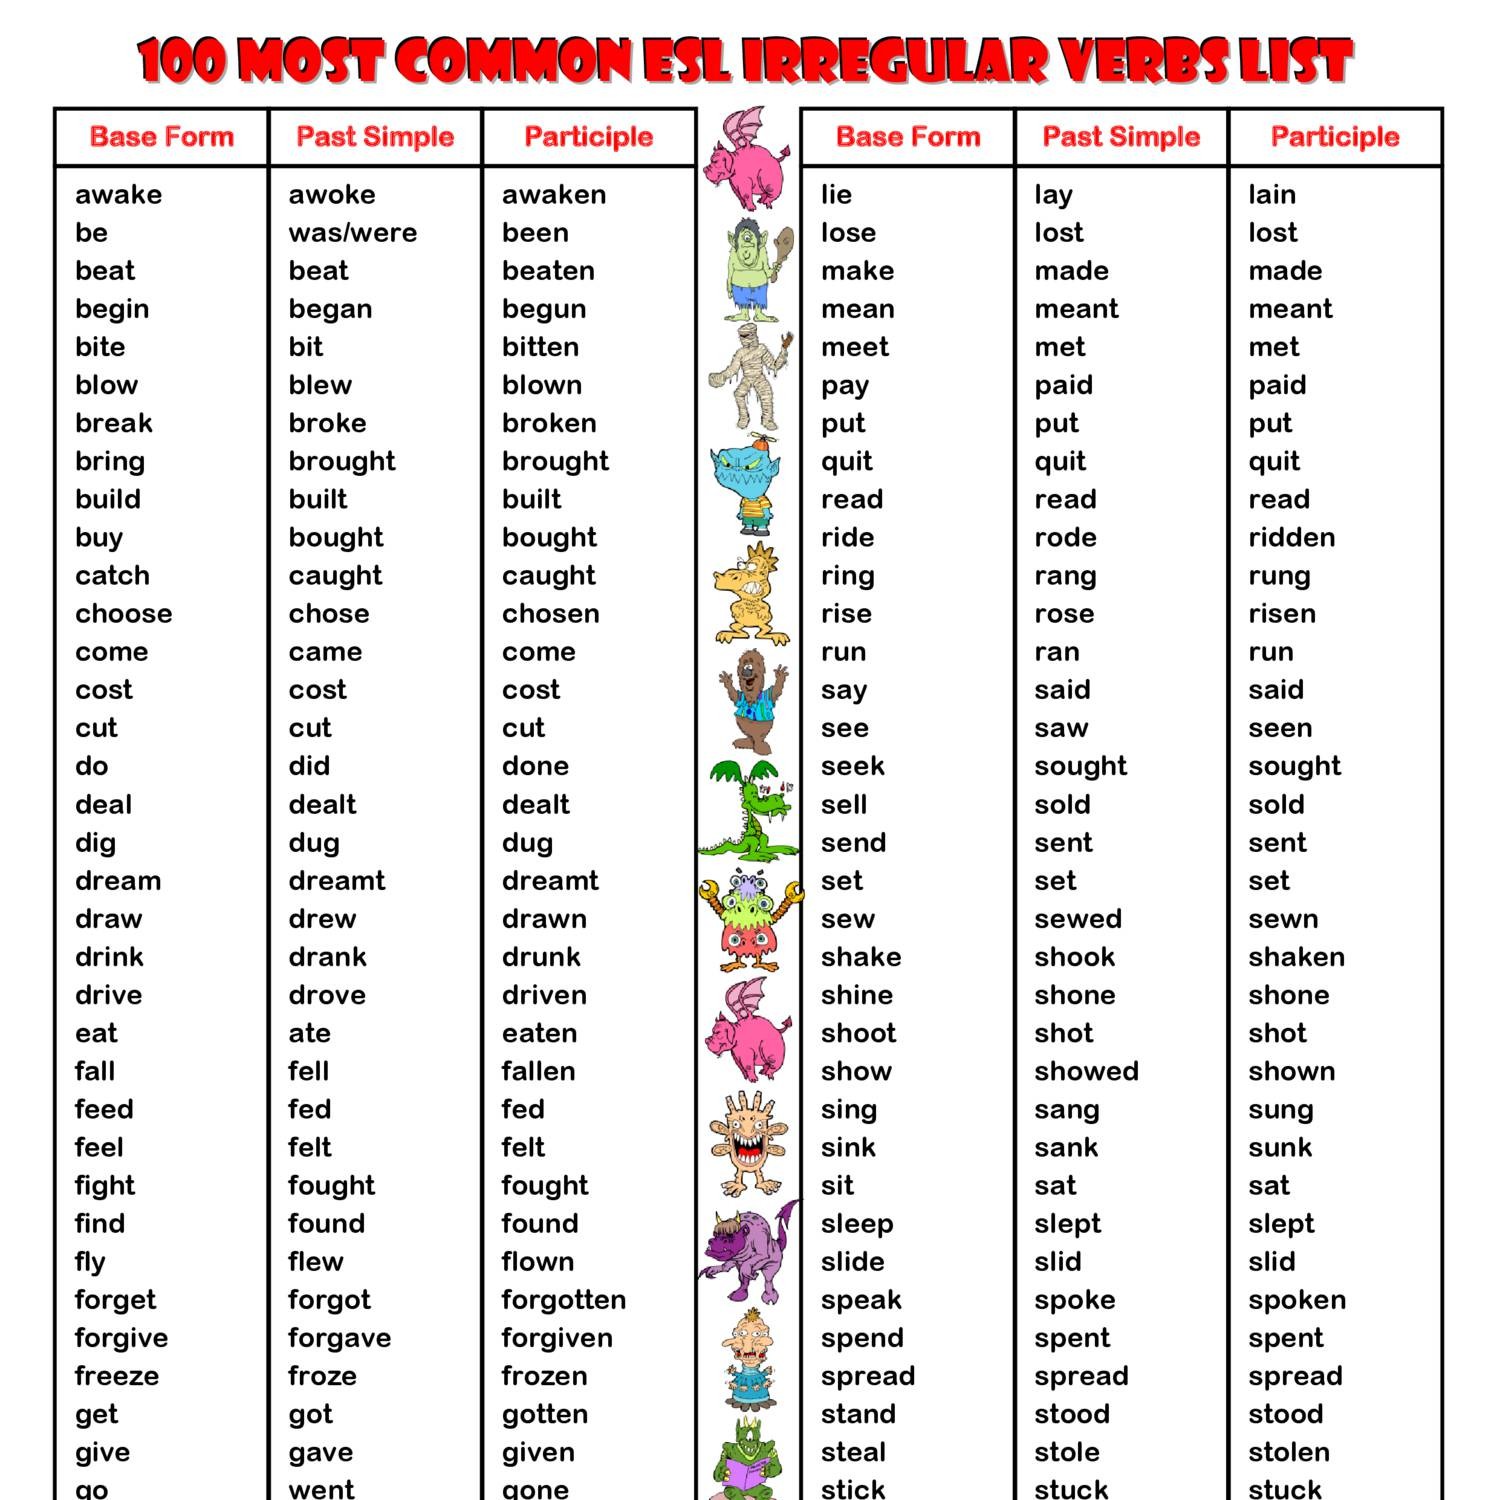 american english irregular verbs list